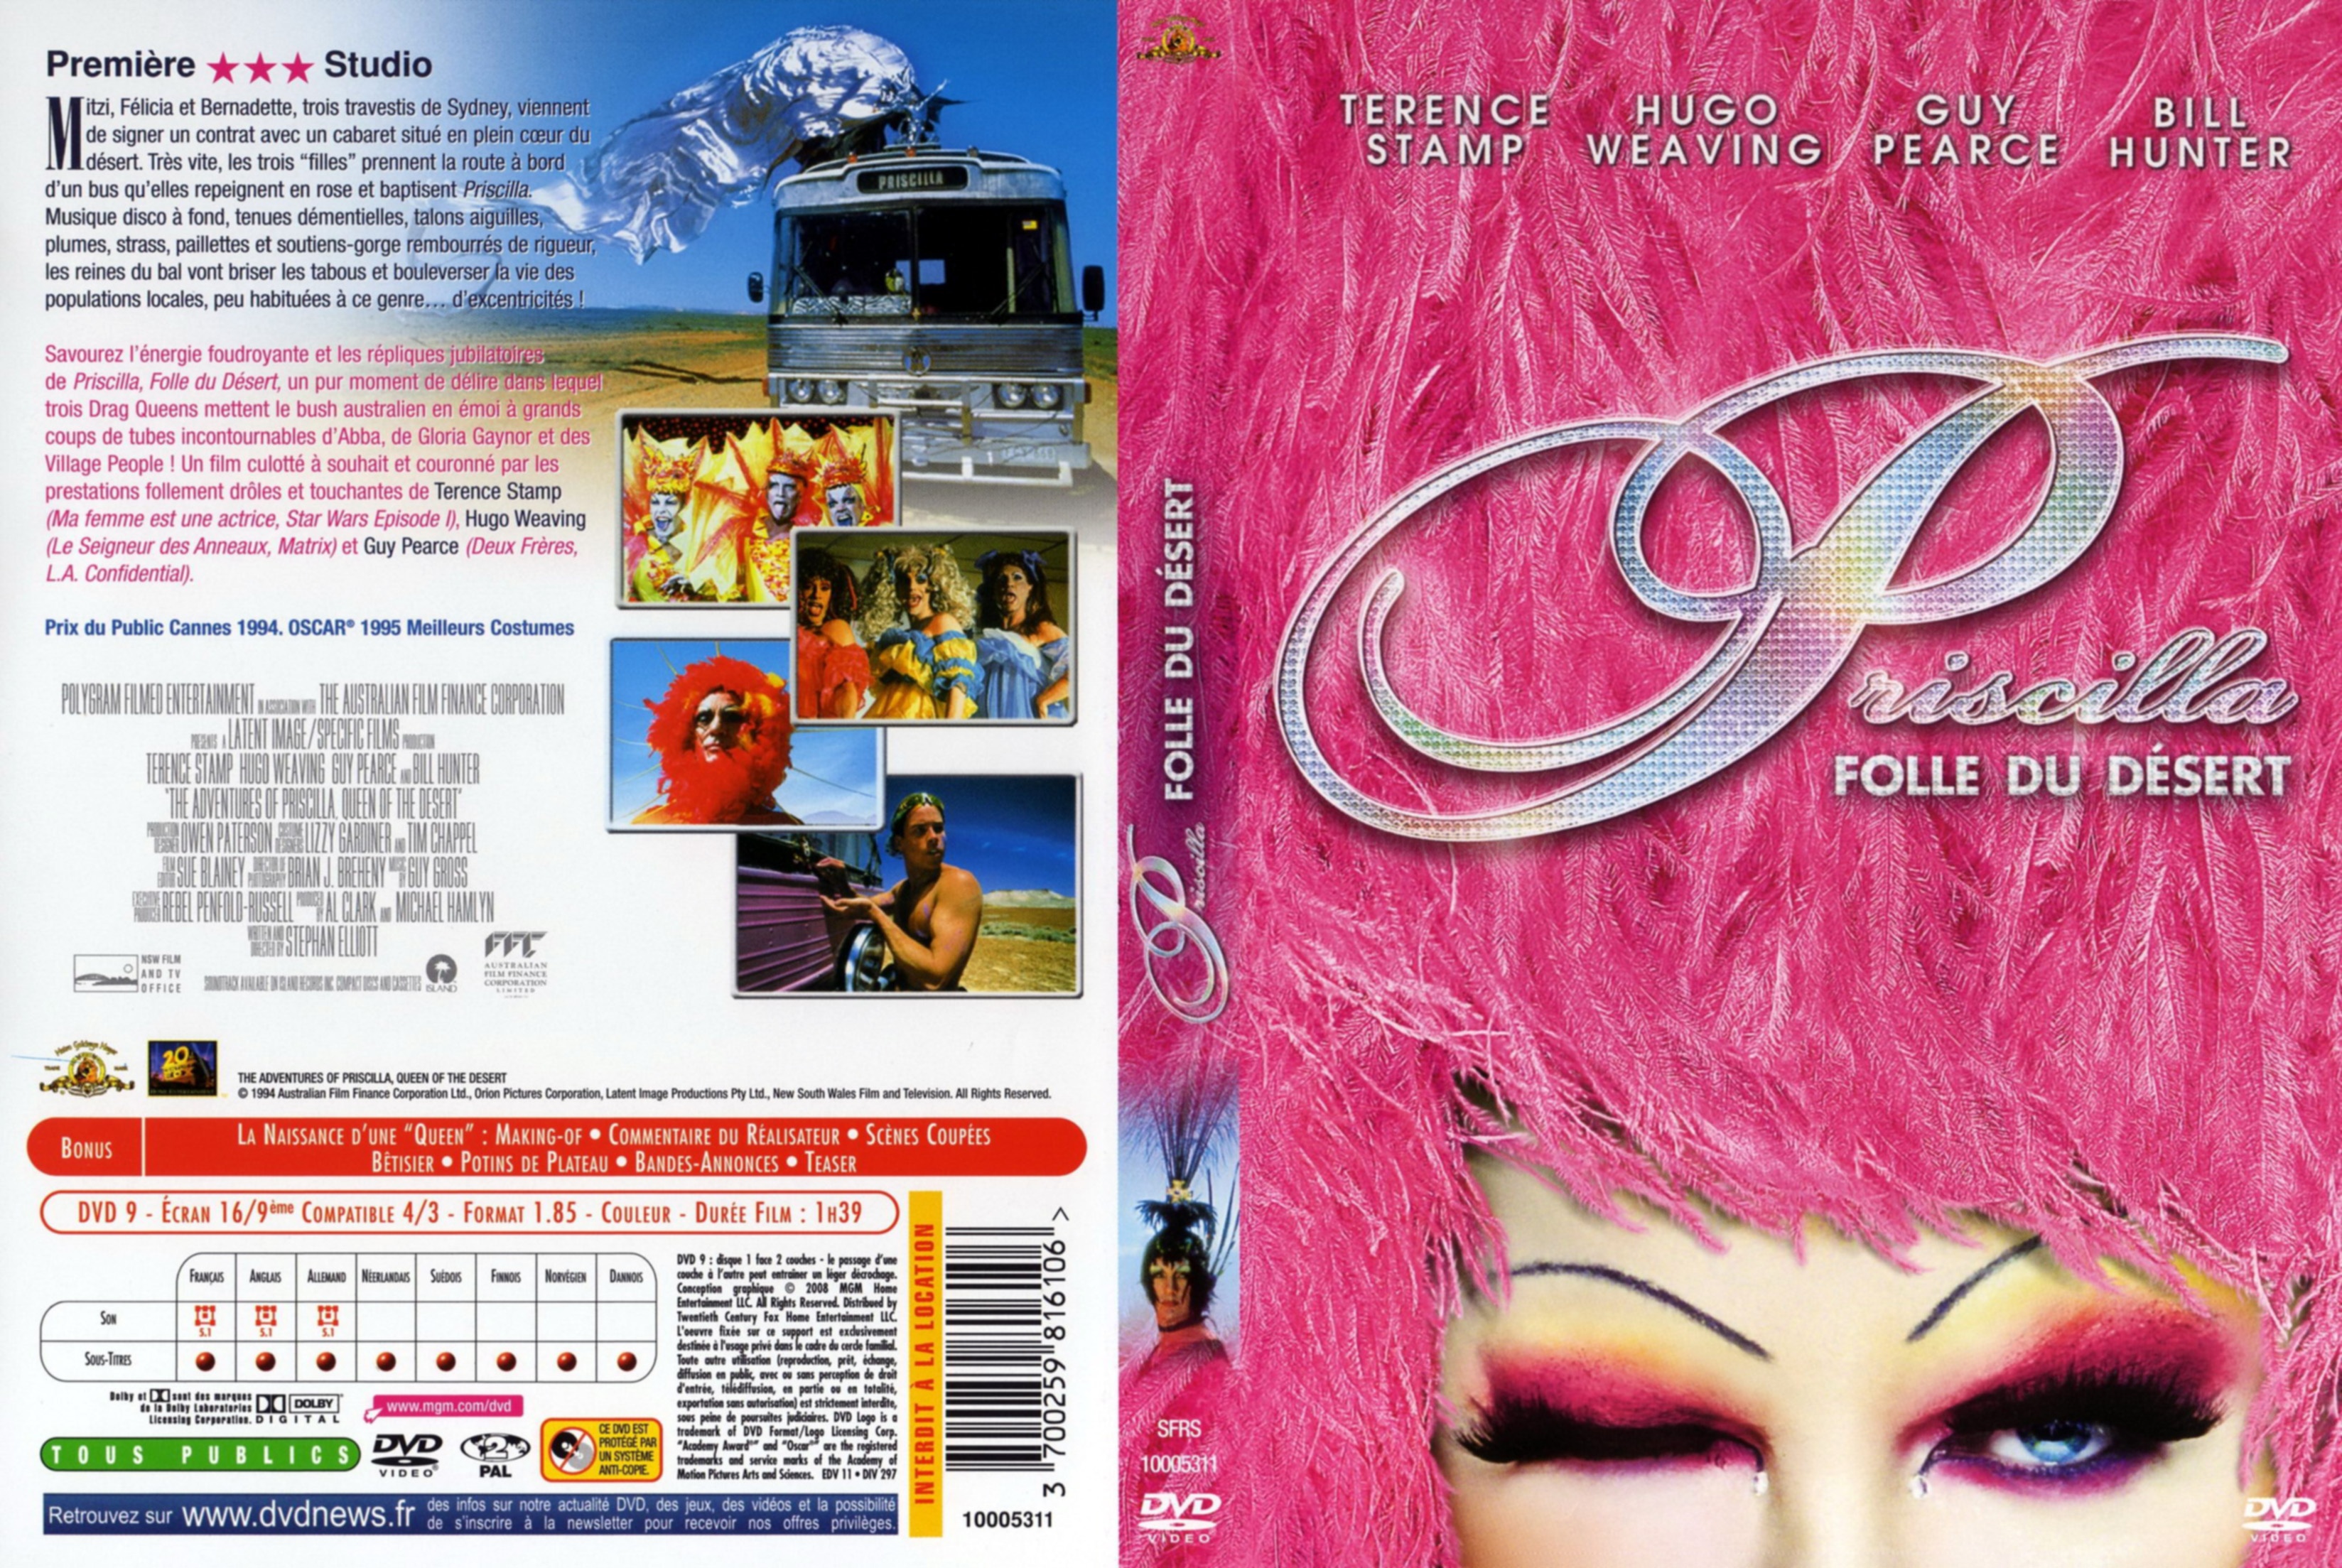 Jaquette DVD Priscilla folle du dsert